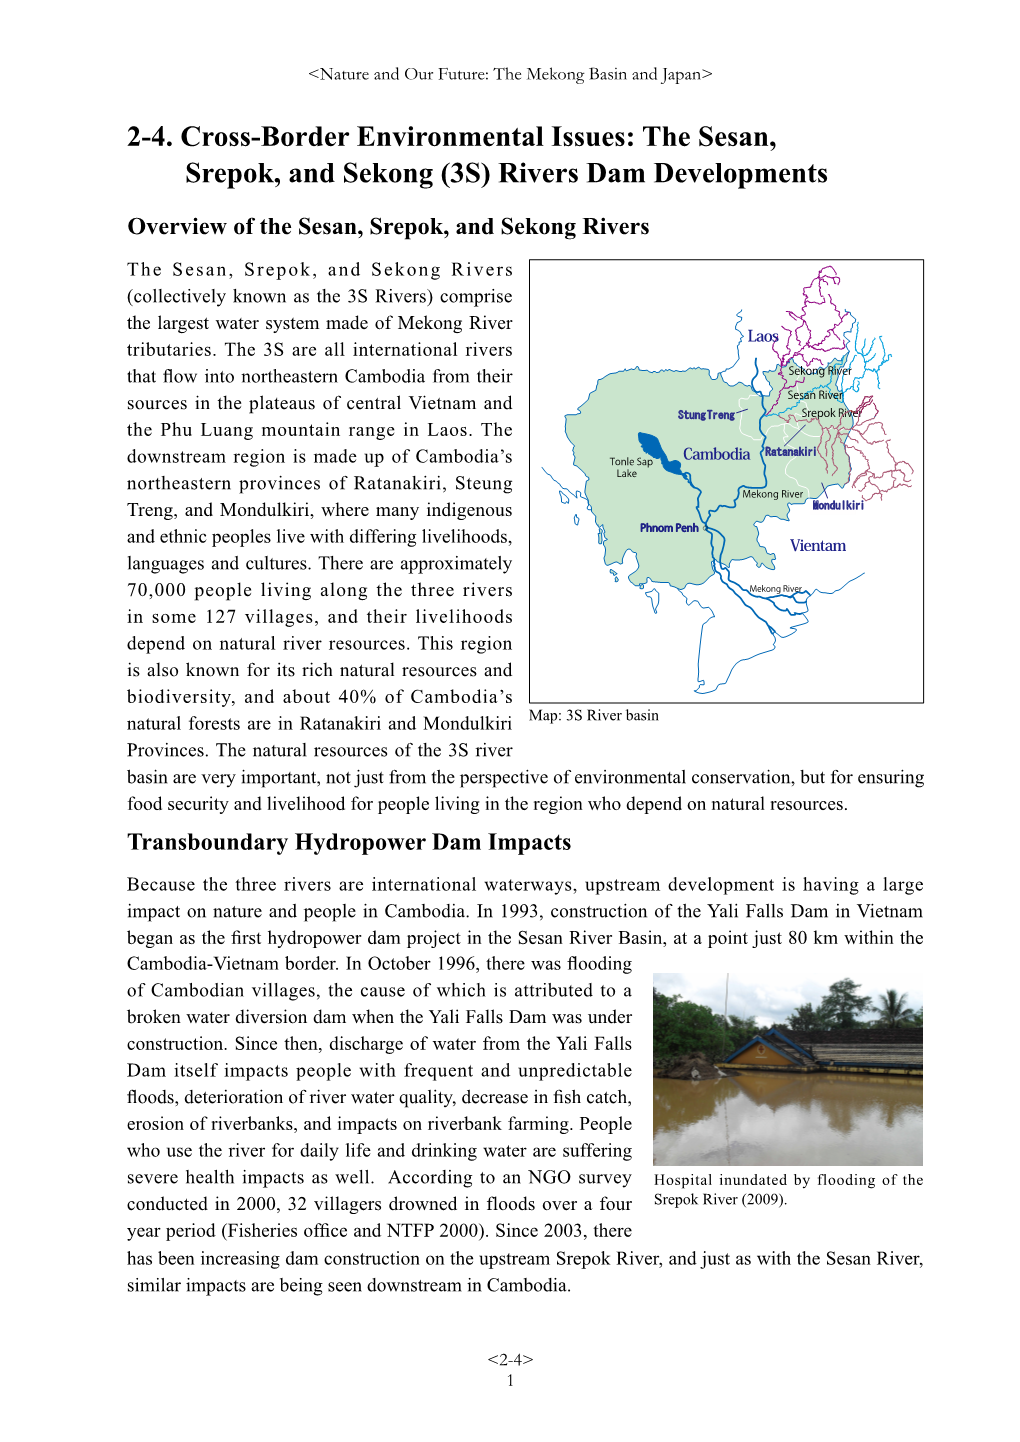 The Sesan, Srepok, and Sekong (3S) Rivers Dam Developments